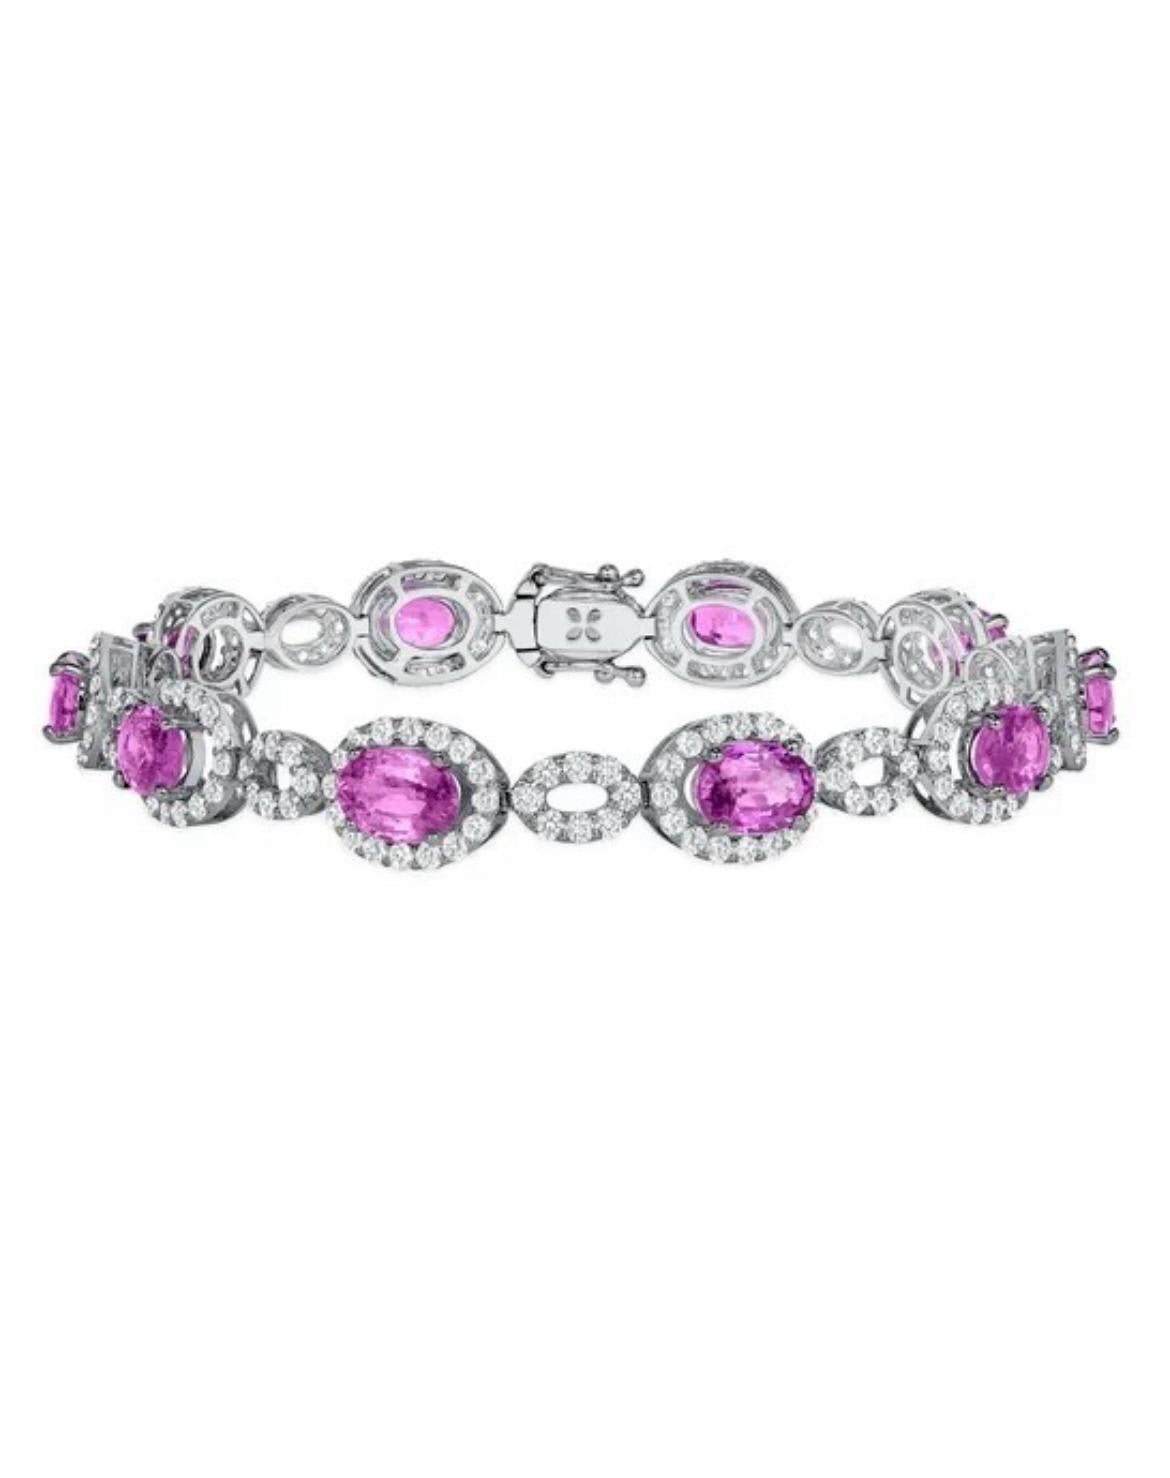 Oval Cut 8.39-carat, oval Pink Sapphire and Diamond bracelet.  For Sale